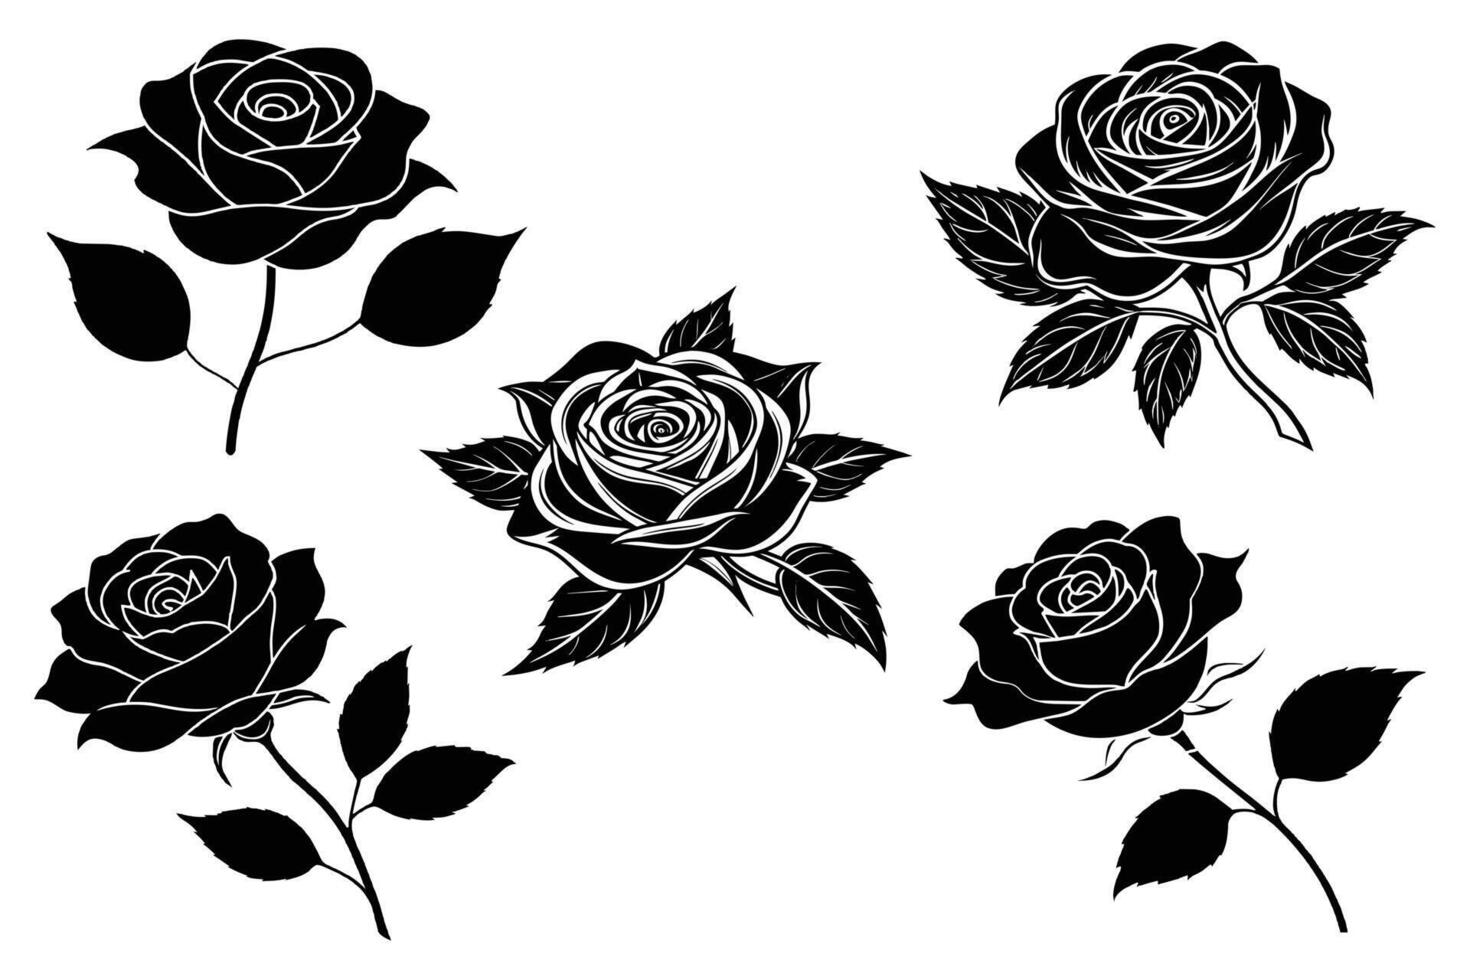 negro silueta ilustración de un Rosa en blanco antecedentes vector